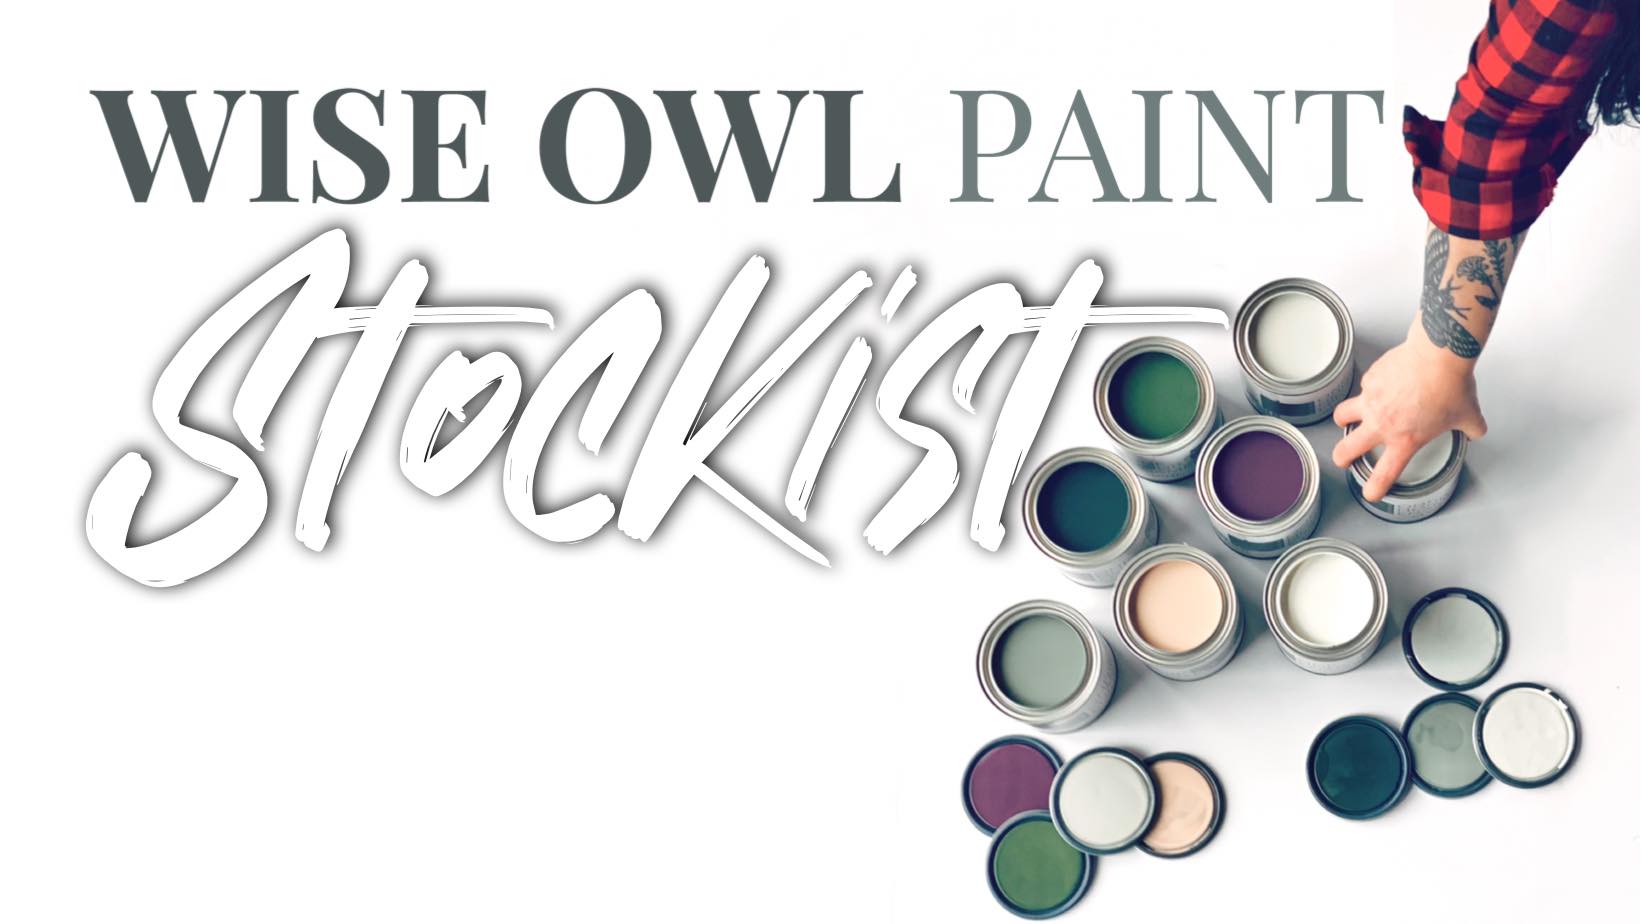 Stingray Paint Sprayer - Wise Owl Paint